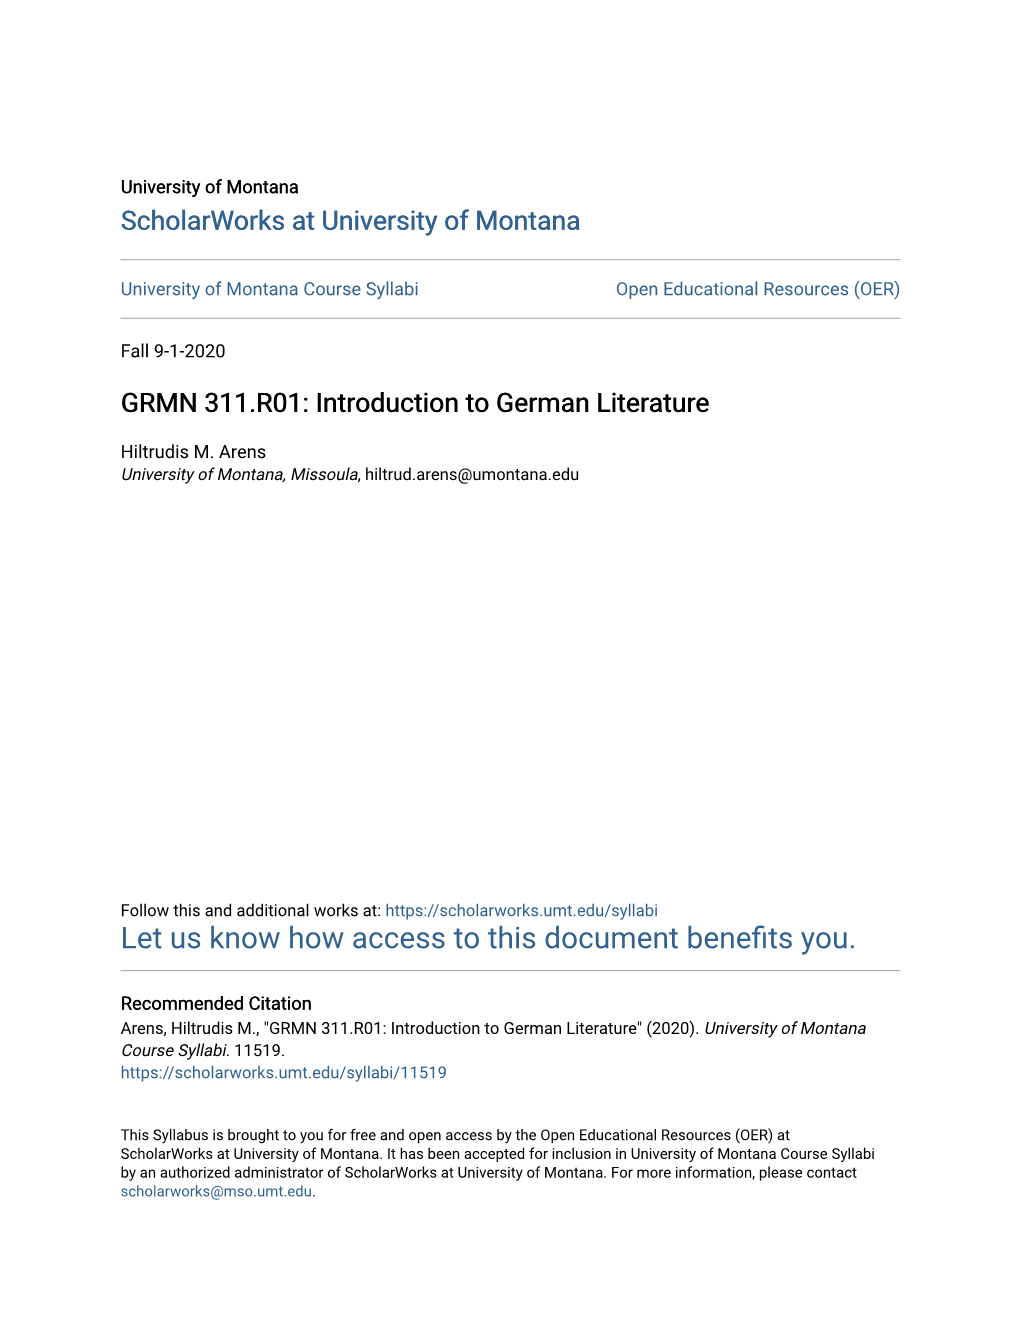 GRMN 311.R01: Introduction to German Literature